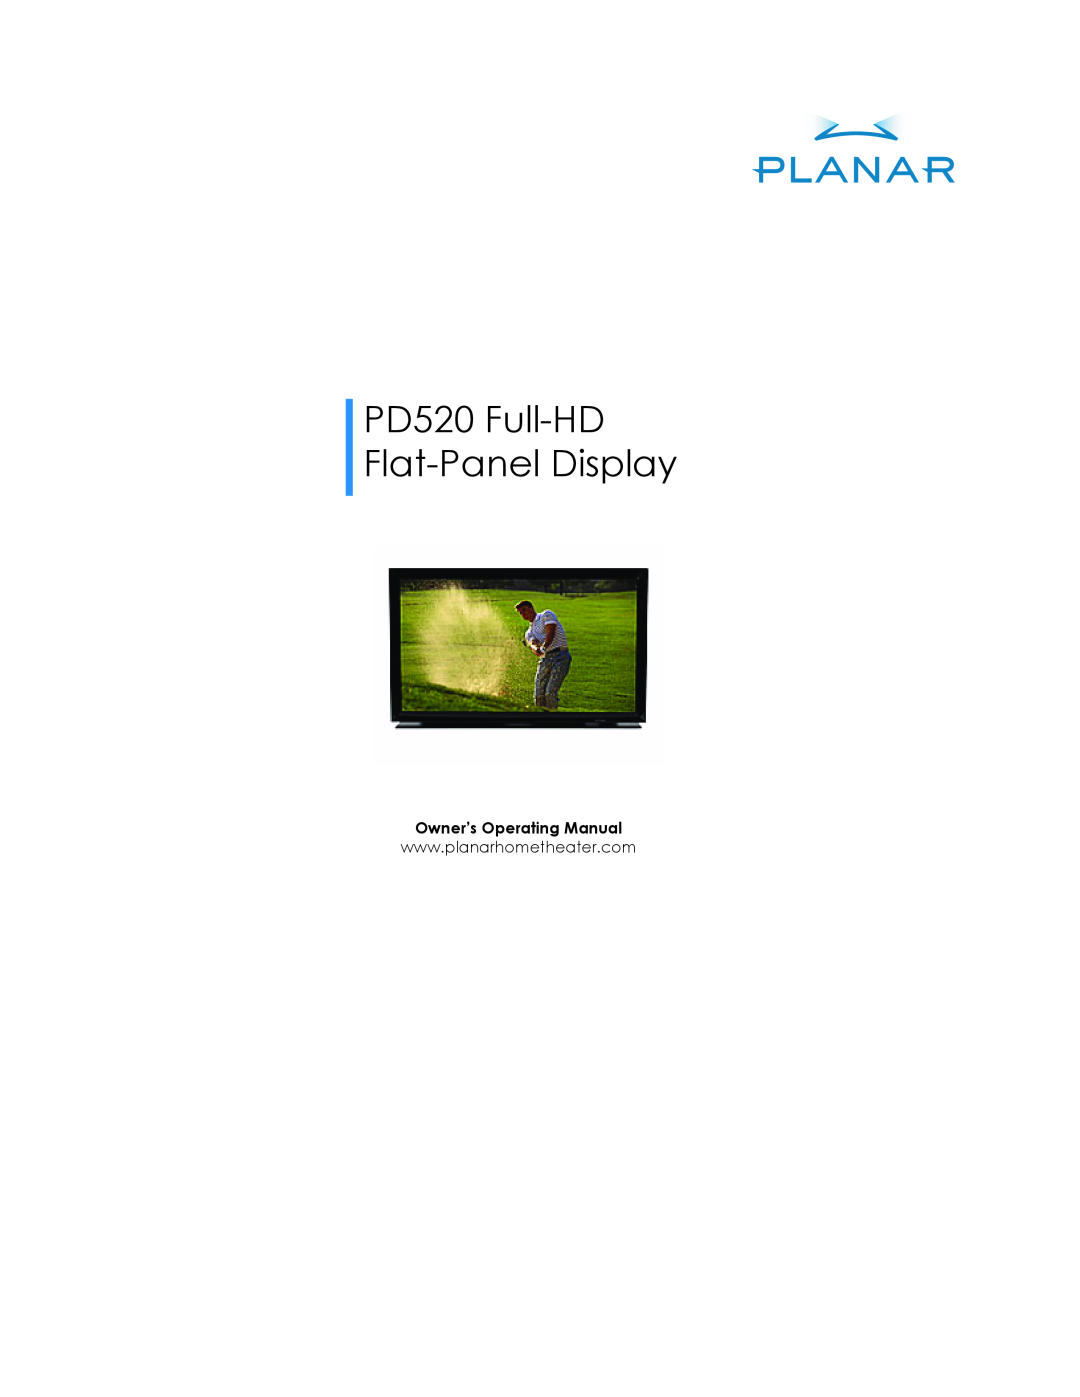 Planar manual PD520 Full-HD Flat-PanelDisplay, Owner’s Operating Manual 